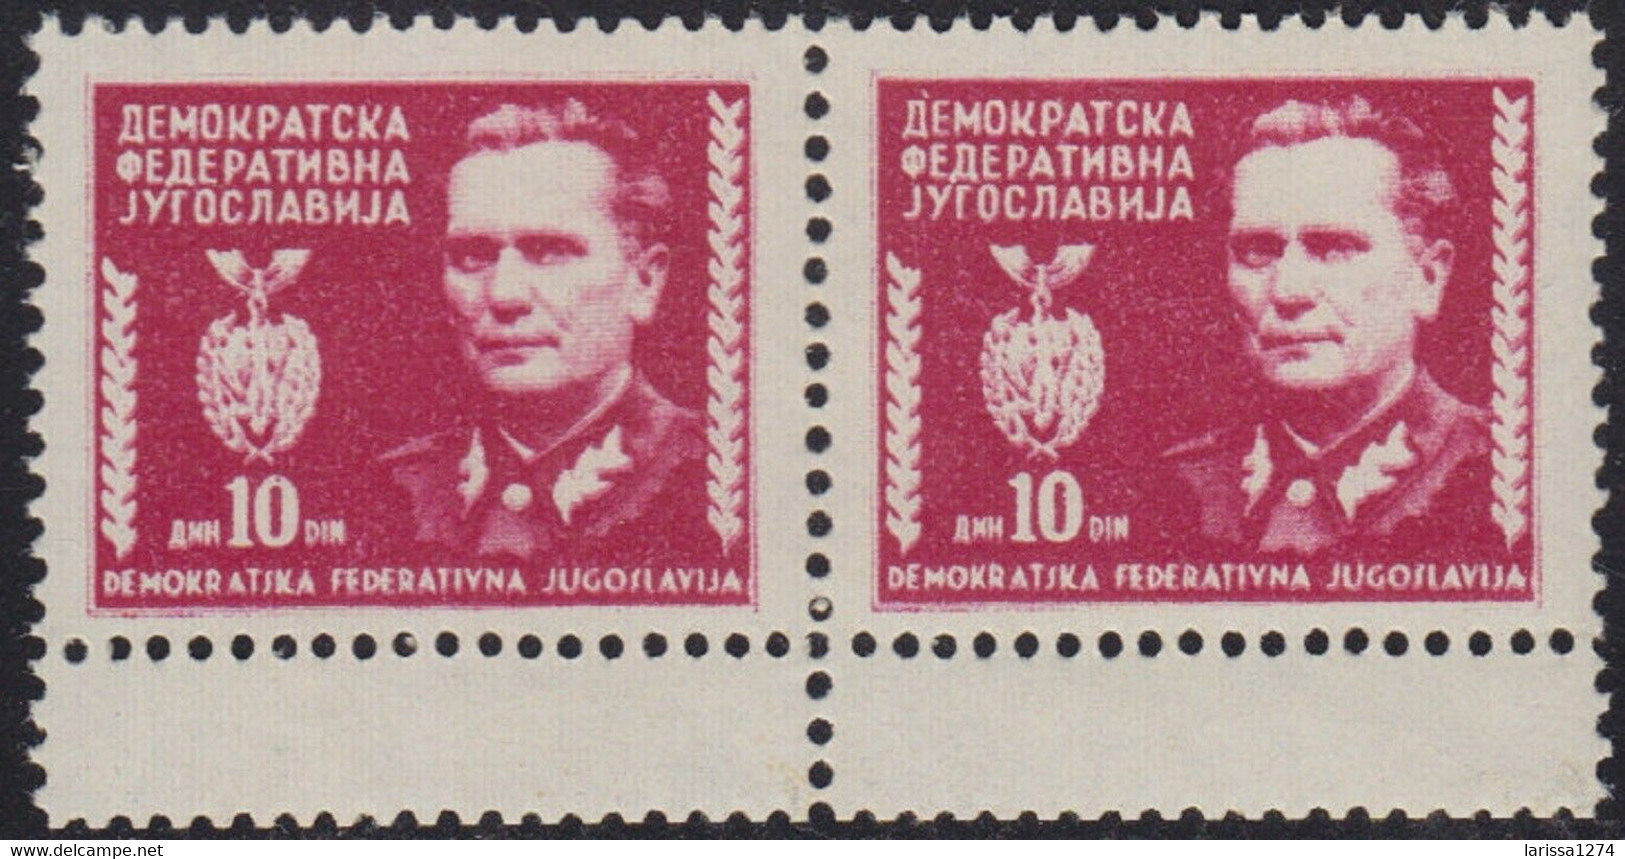 535.Yugoslavia 1945 Tito ERROR Double Perforation MNH Michel 455 - Non Dentelés, épreuves & Variétés